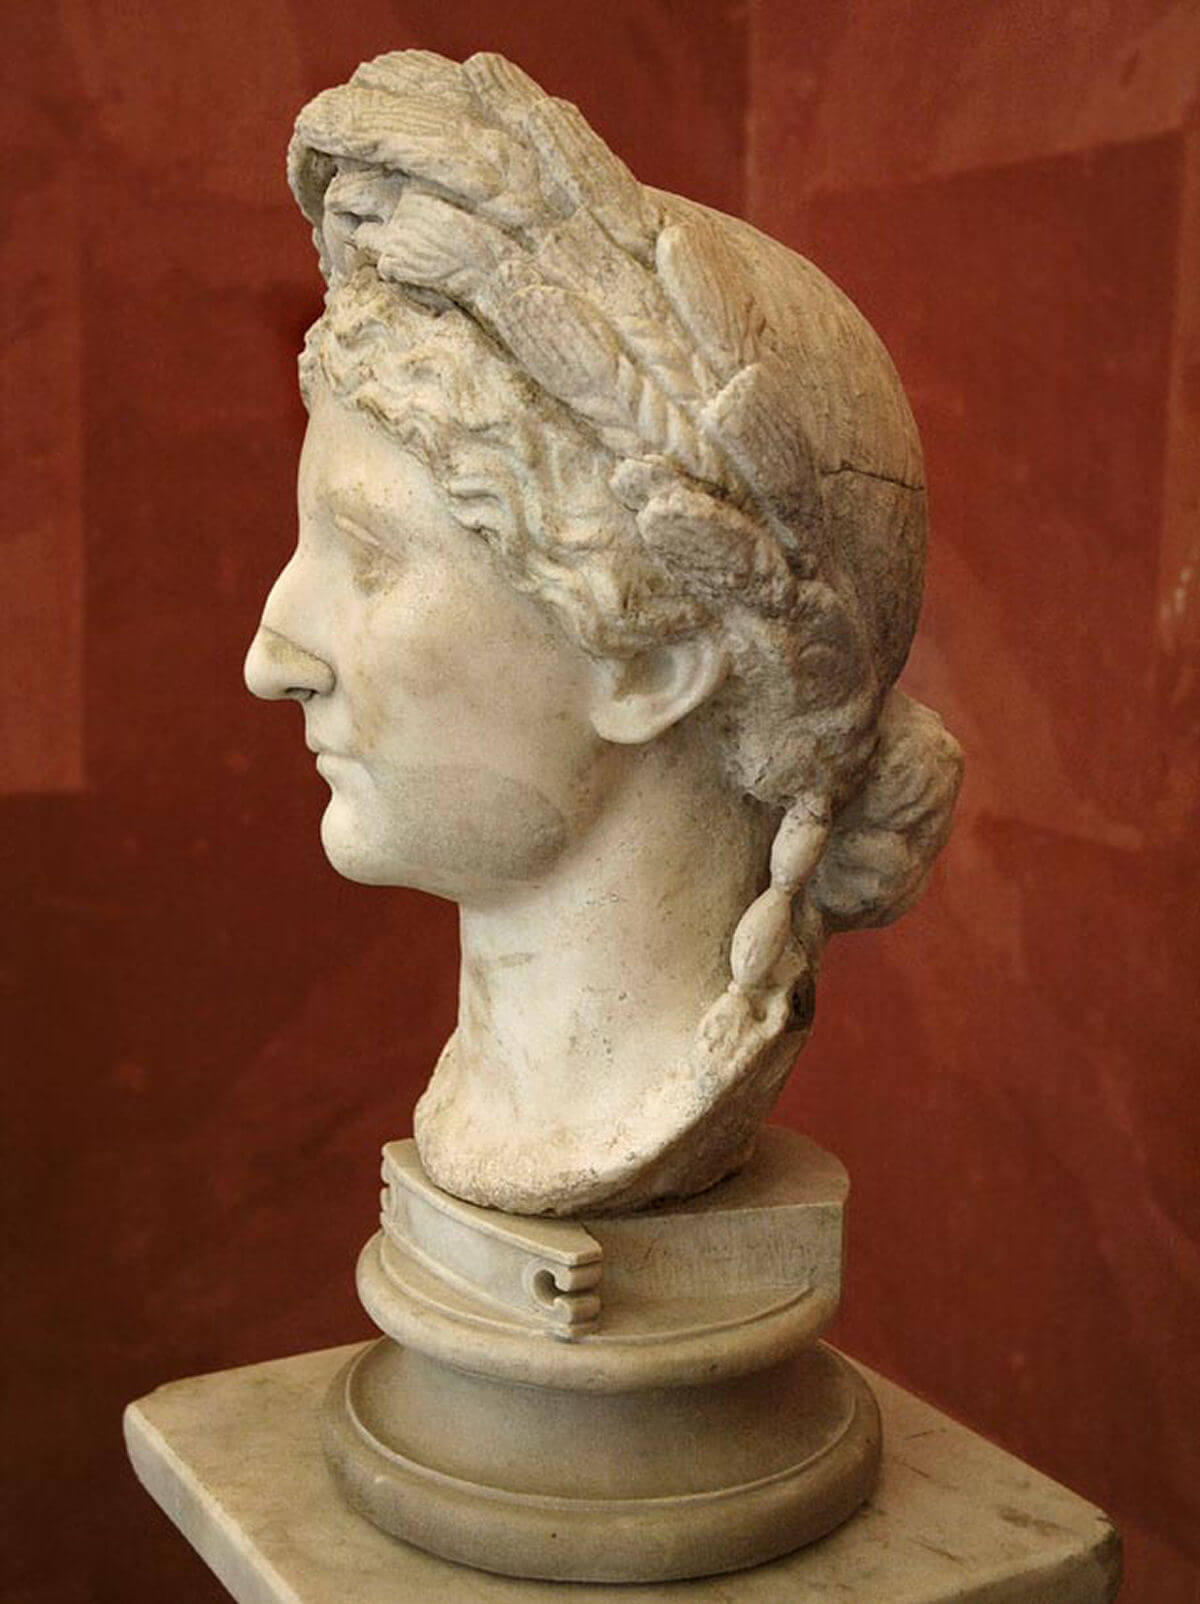 A portrait bust of Livia Drusilla